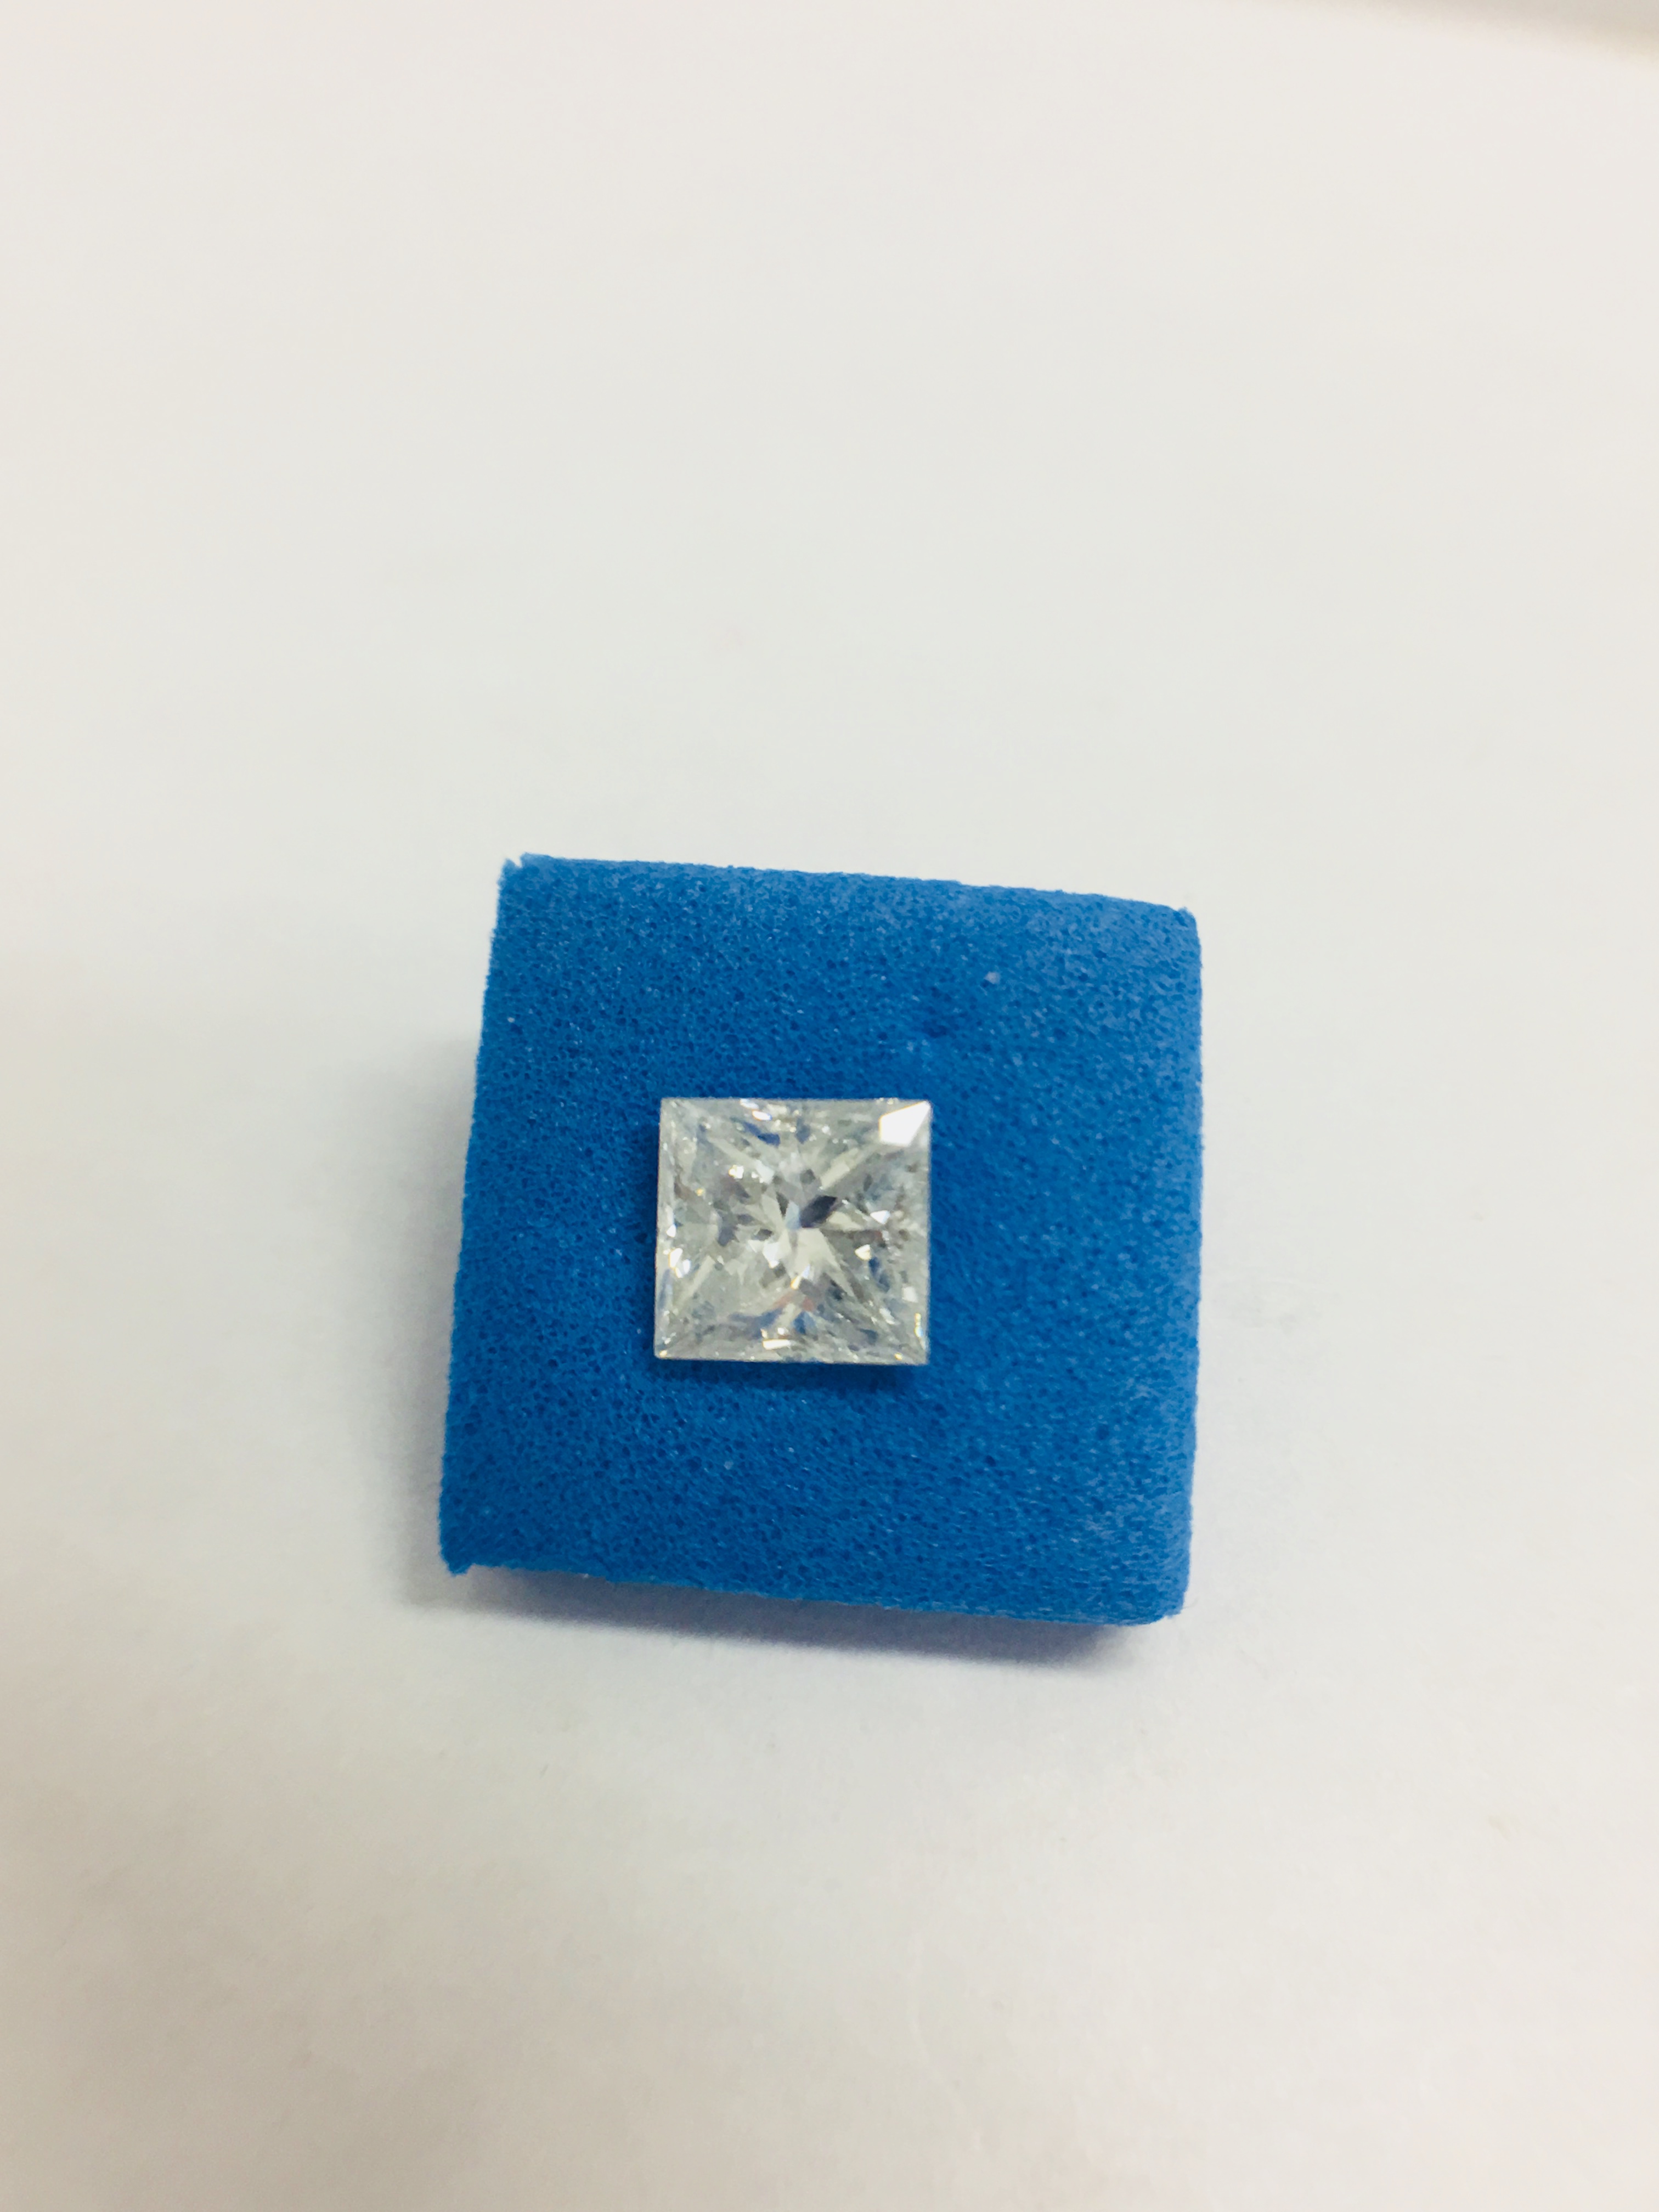 1.02ct Princess cut natural diamond,I Coloured,si2 clarity,excellent cut,clarity enhanced